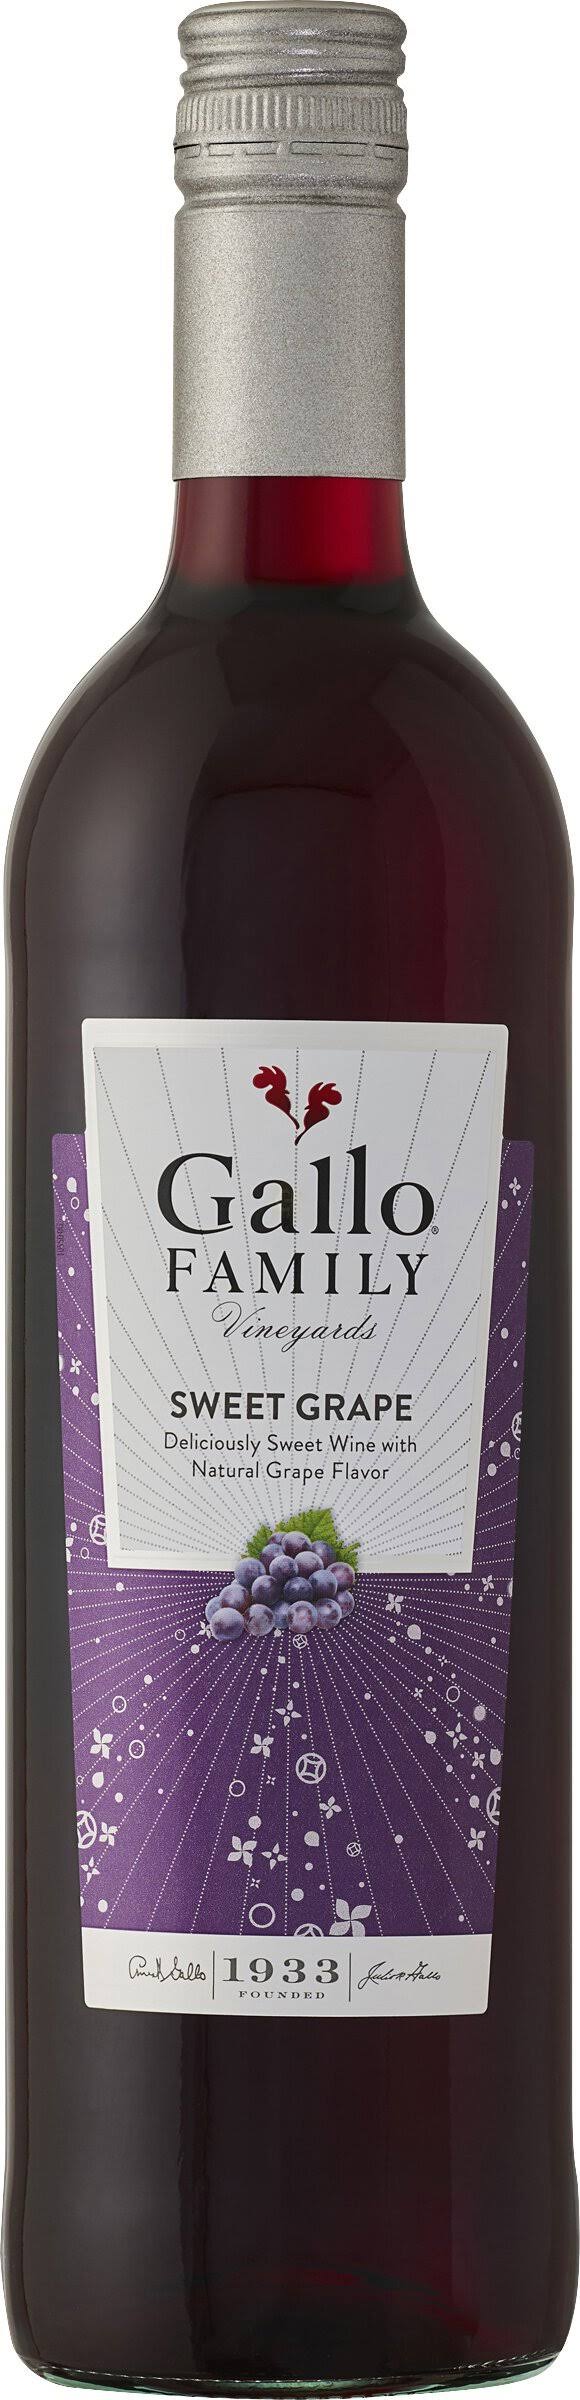 Gallo Family Sweet Grape Vineyards - 750 ml